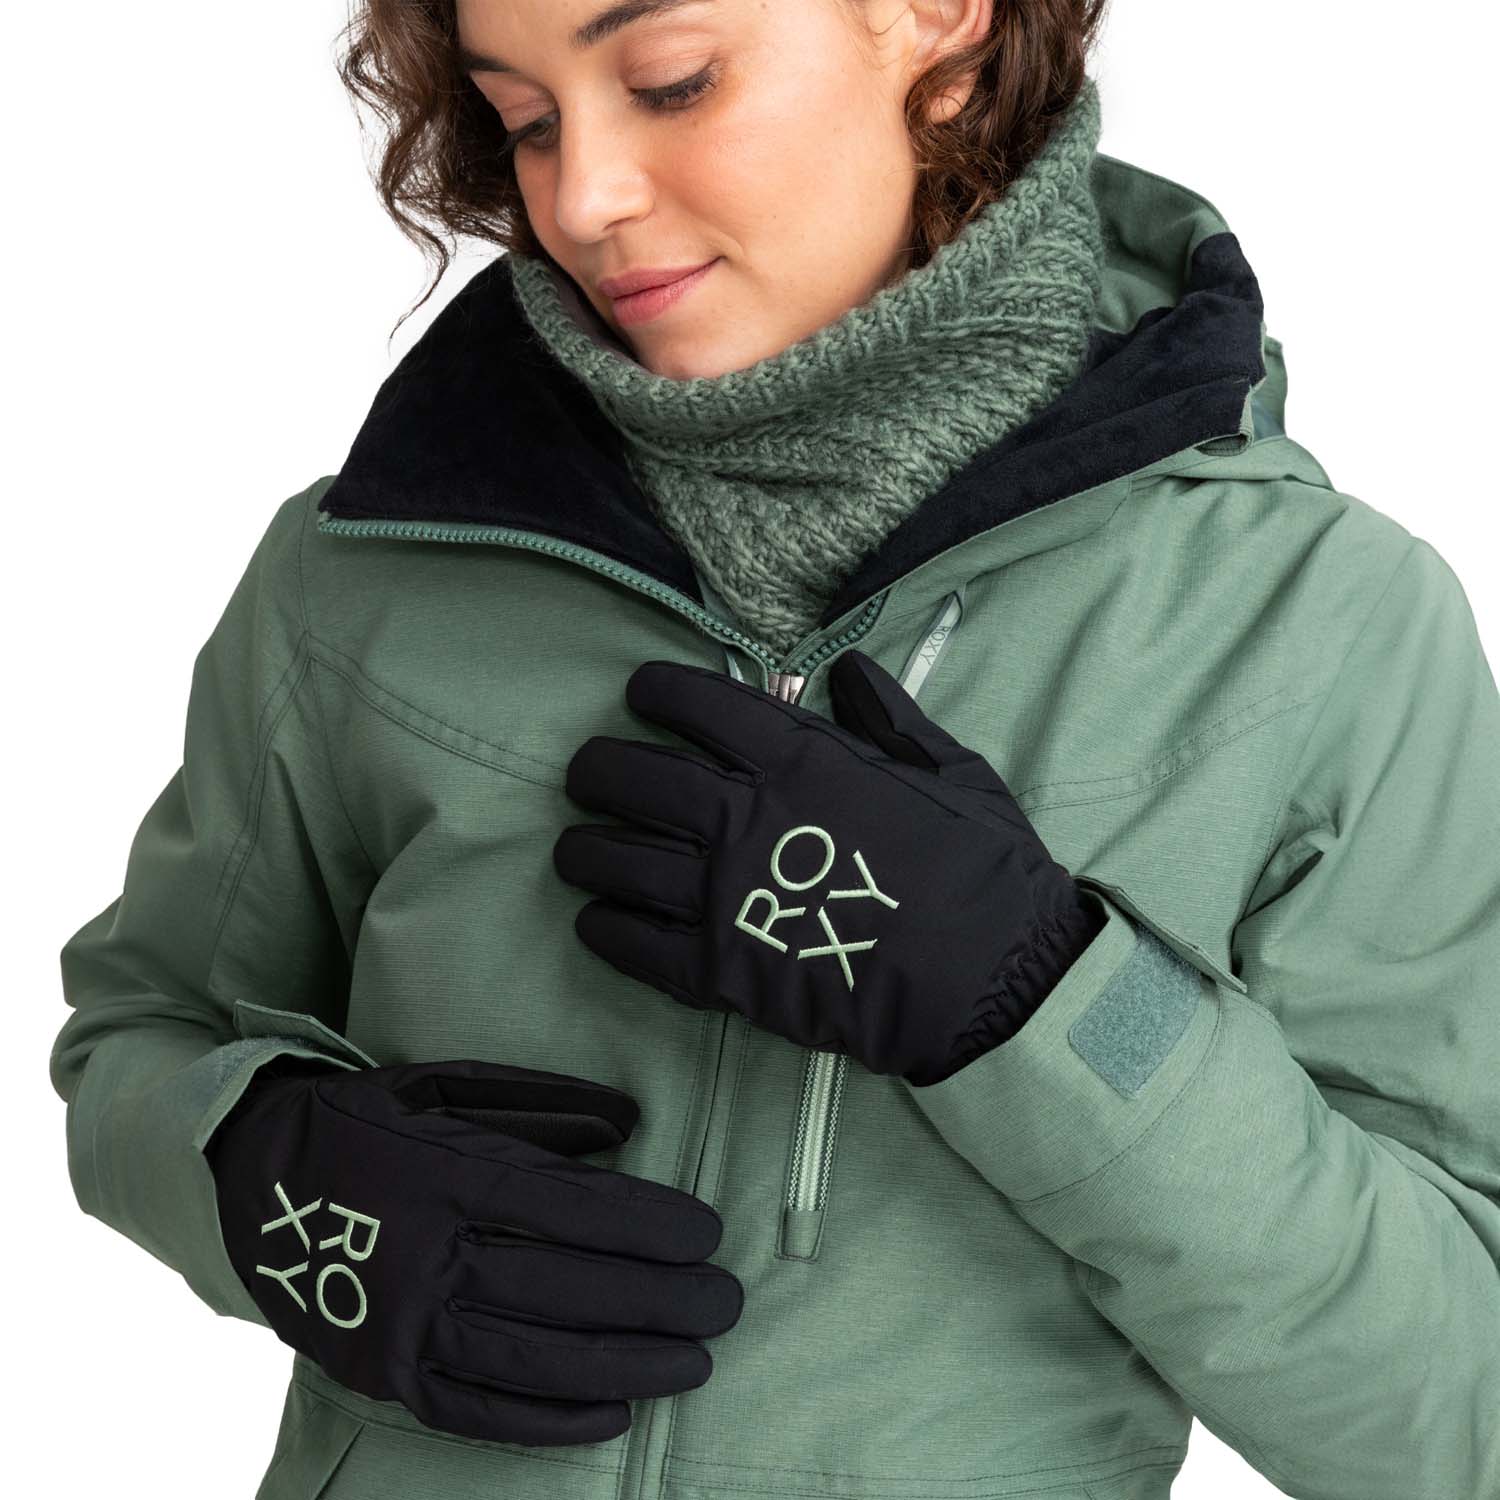 Roxy Freshfield Women's Snowboard/Ski Gloves